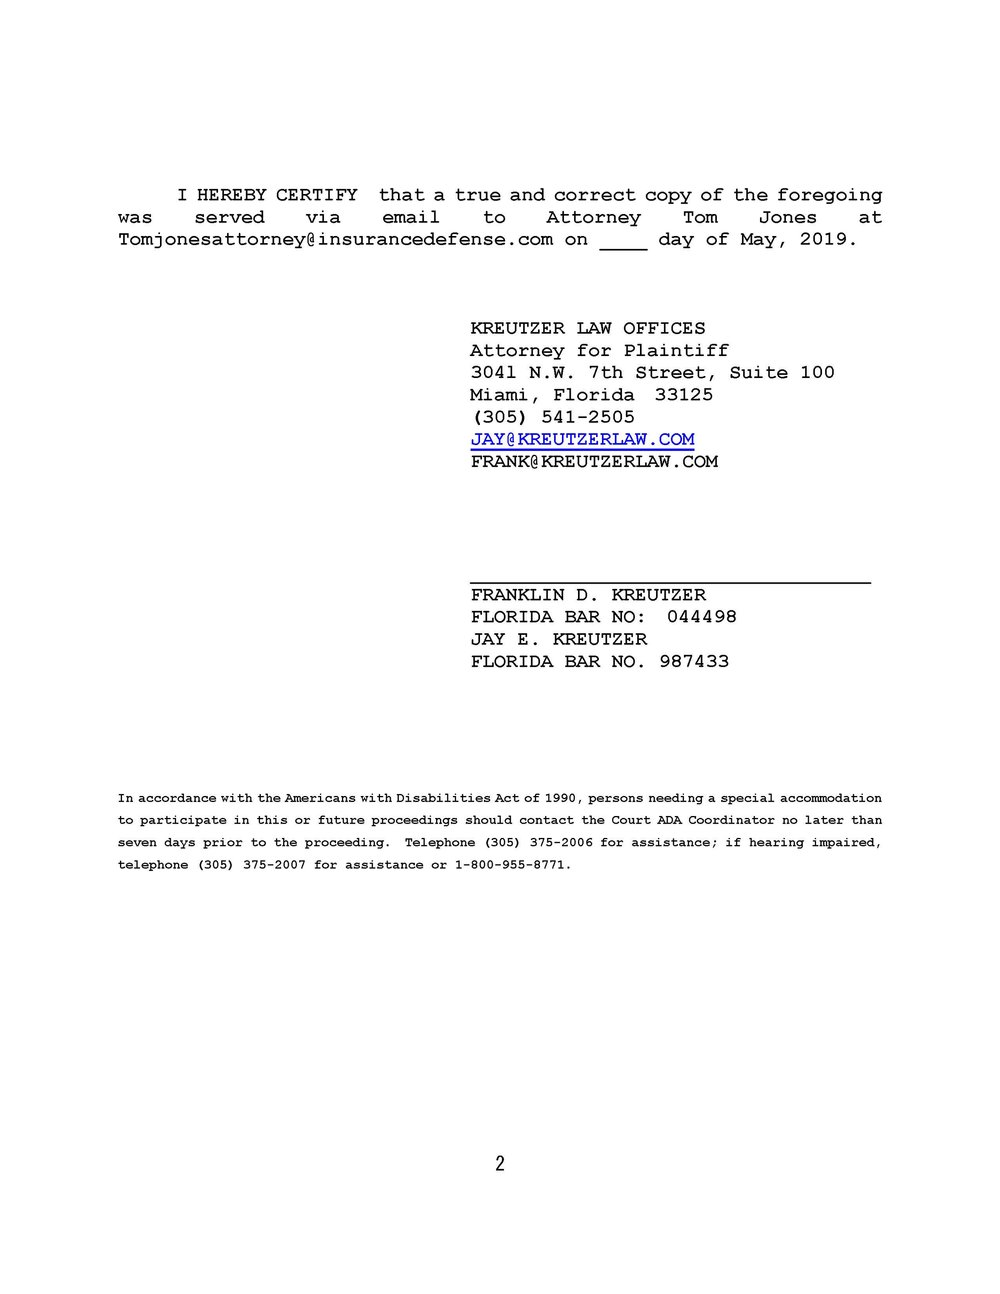 Kreutzer-Law-Attorney-Miami-Lawyers-Depo notice.not_Page_2.jpg